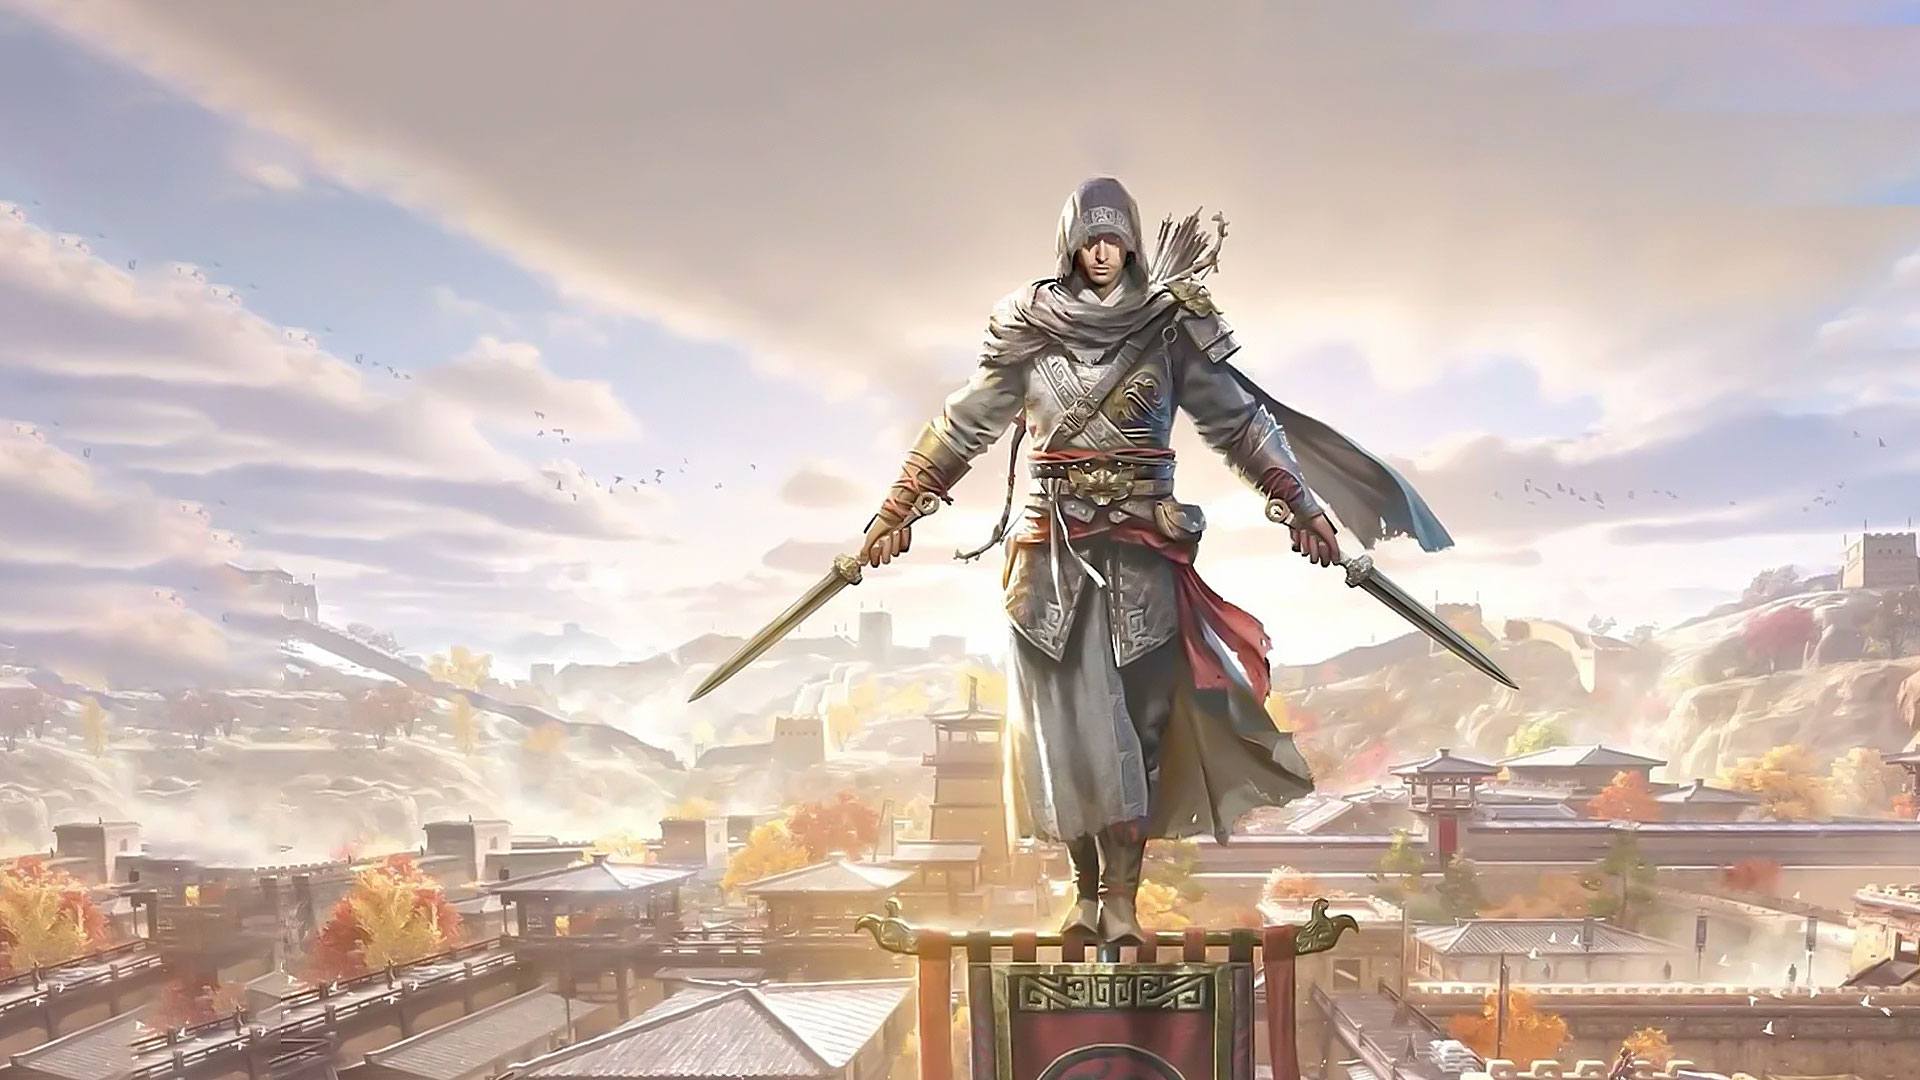 Assassin’s Creed Jade